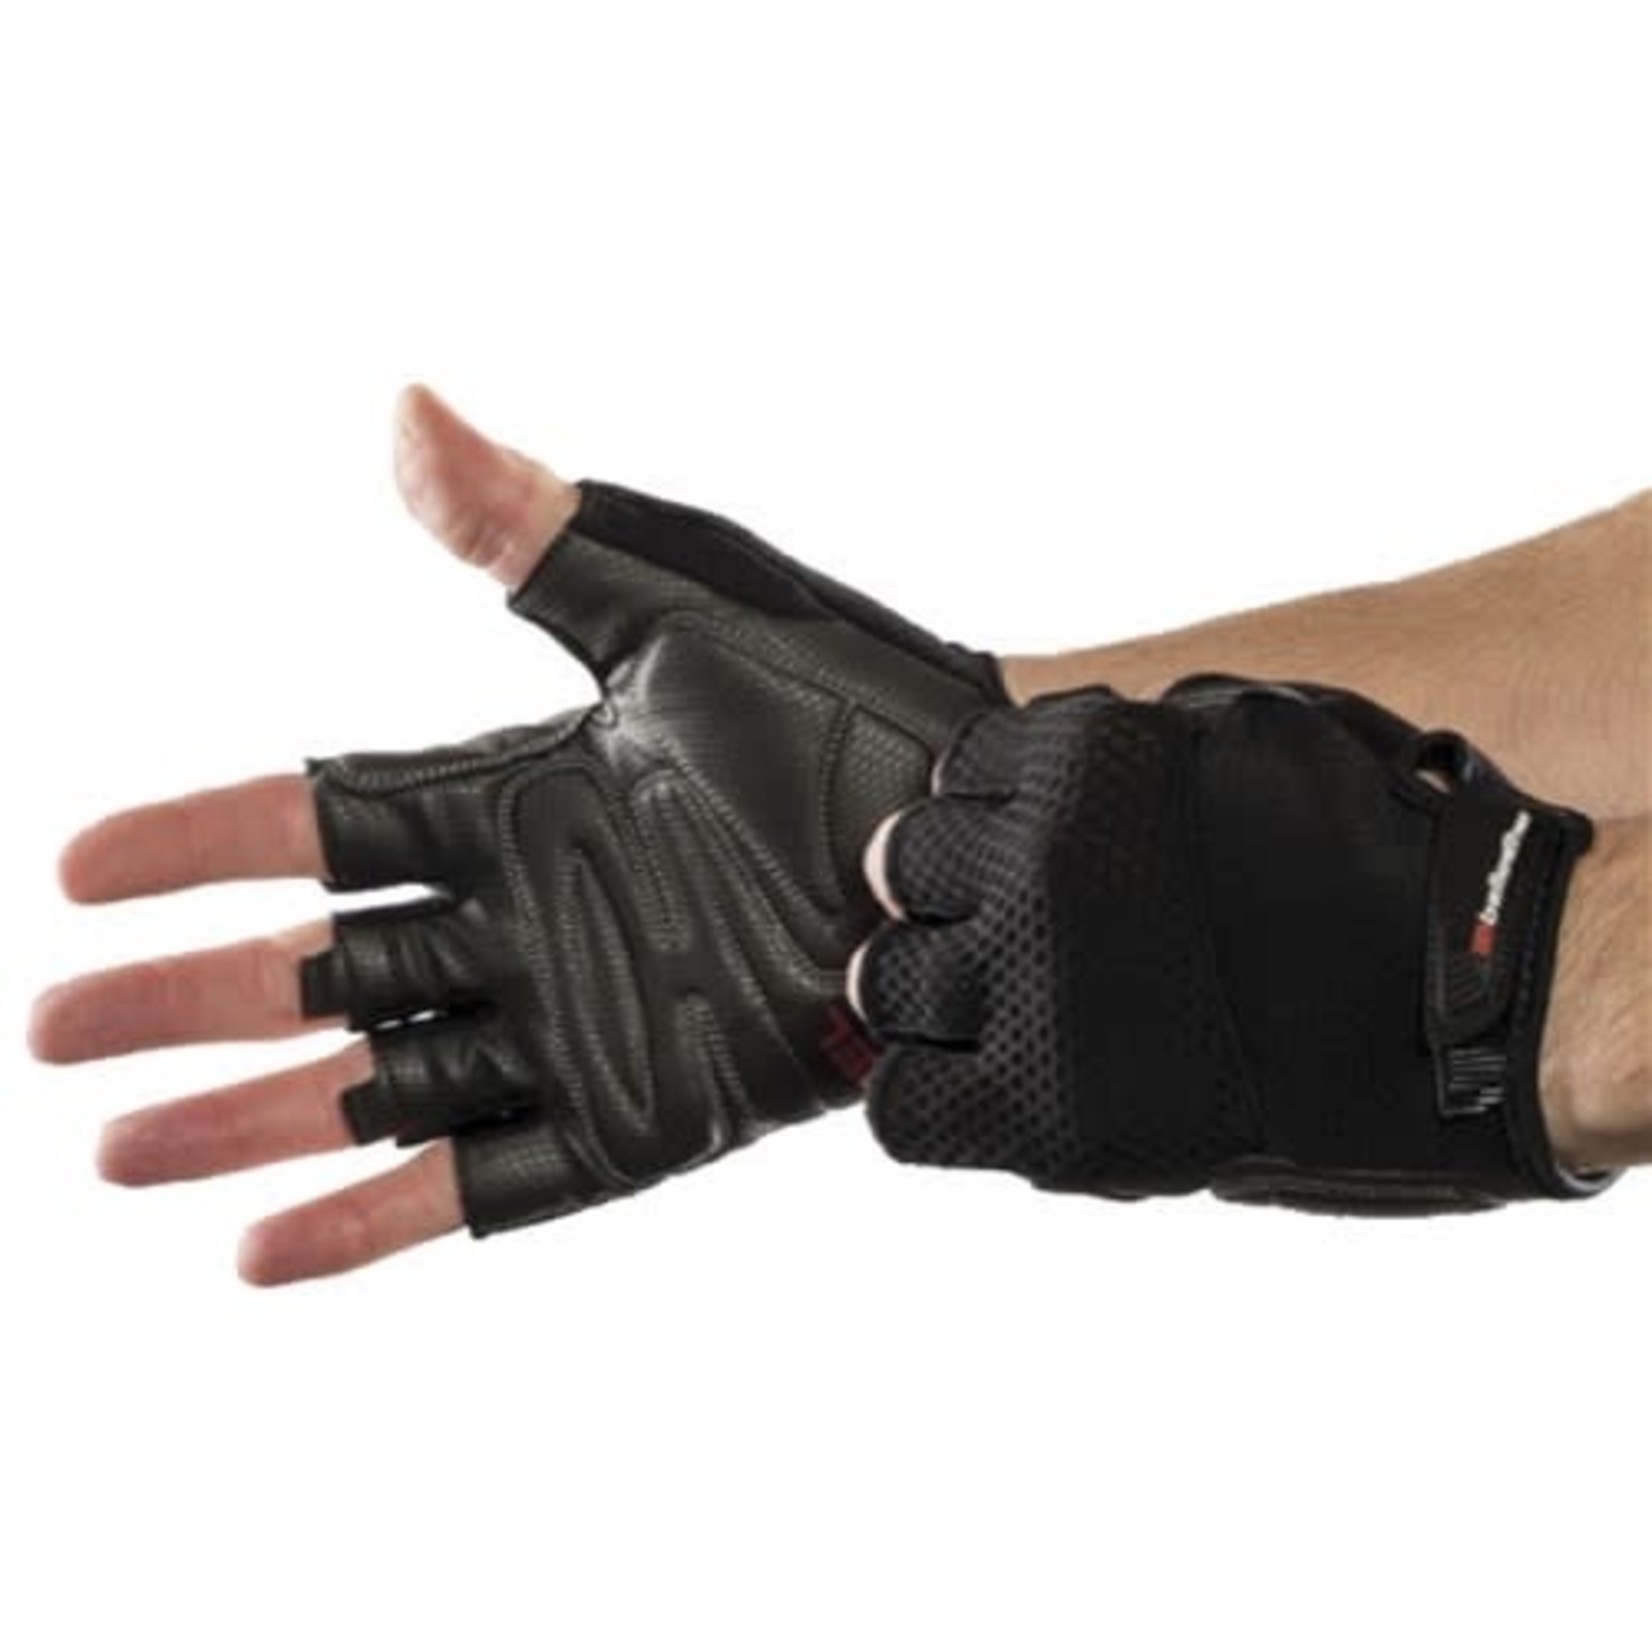 Bellwether Bellwether Cycling/Bike Microfibre Thumb Gloves-Men's Gel Supreme Glove - Black